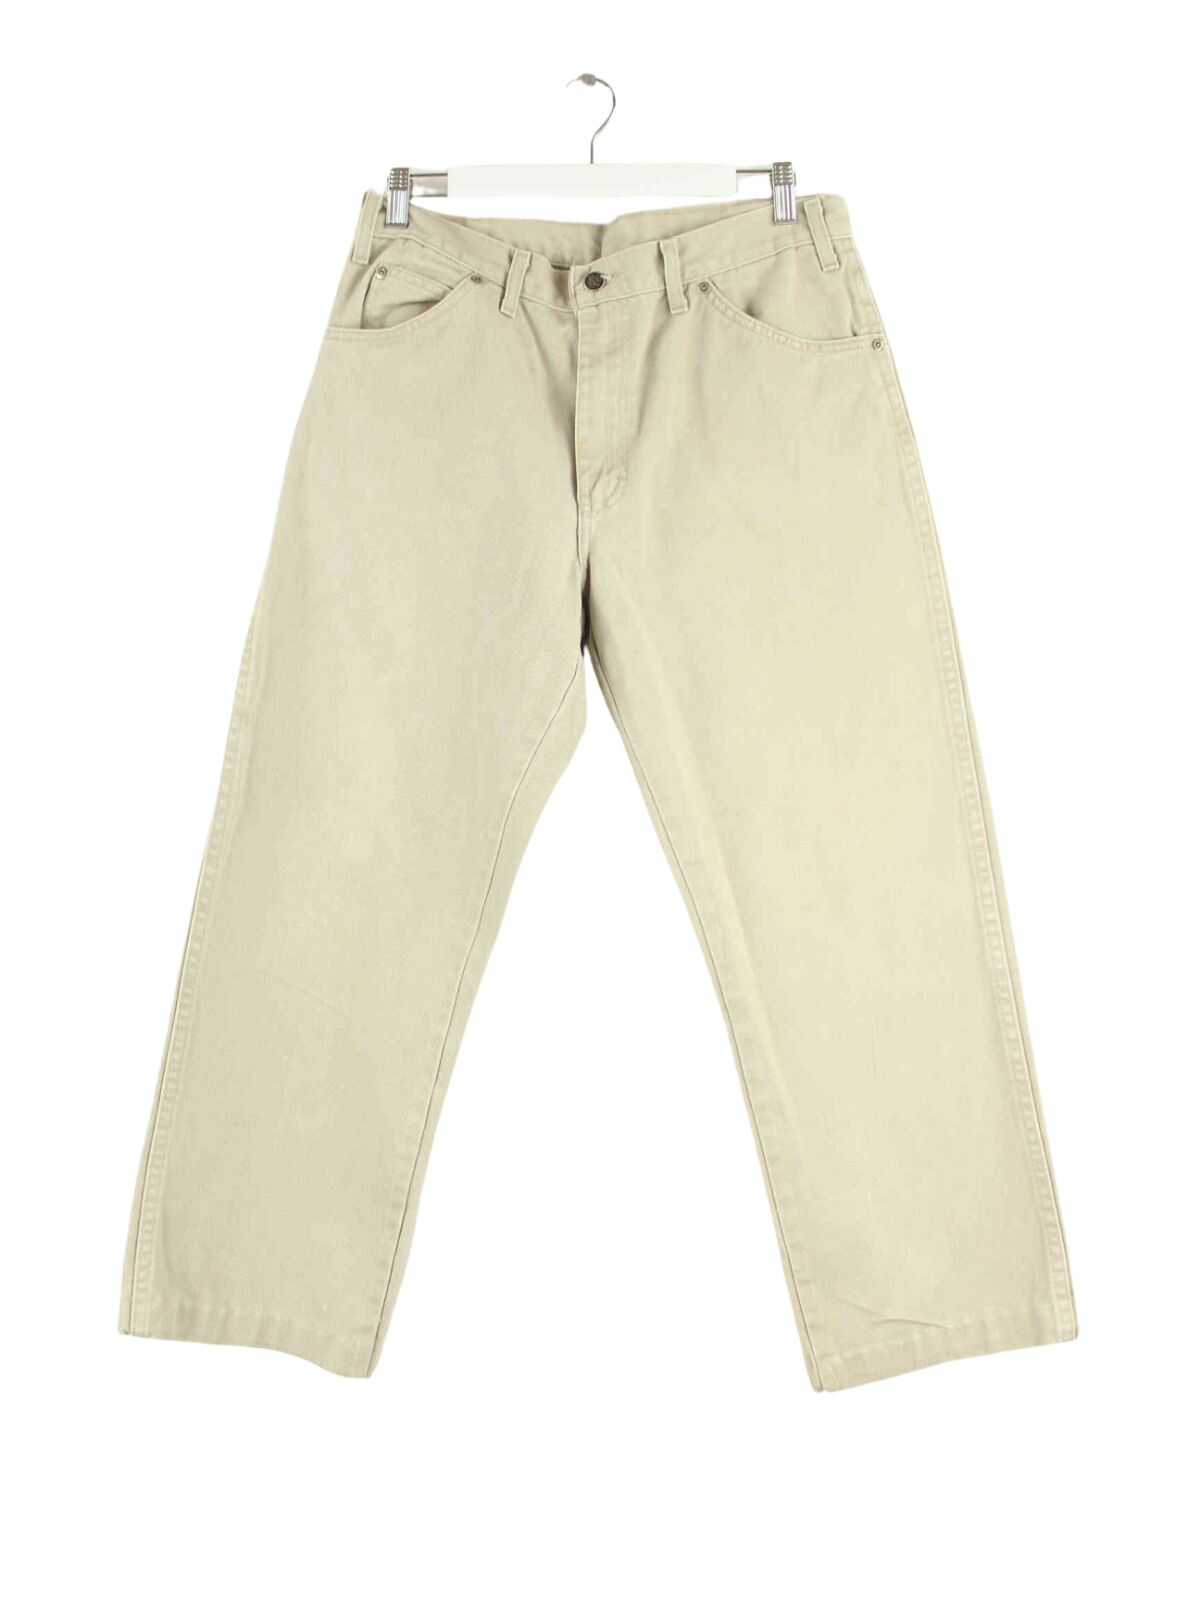 Dickies Regular Fit Jeans Beige W34 L32 (front image)